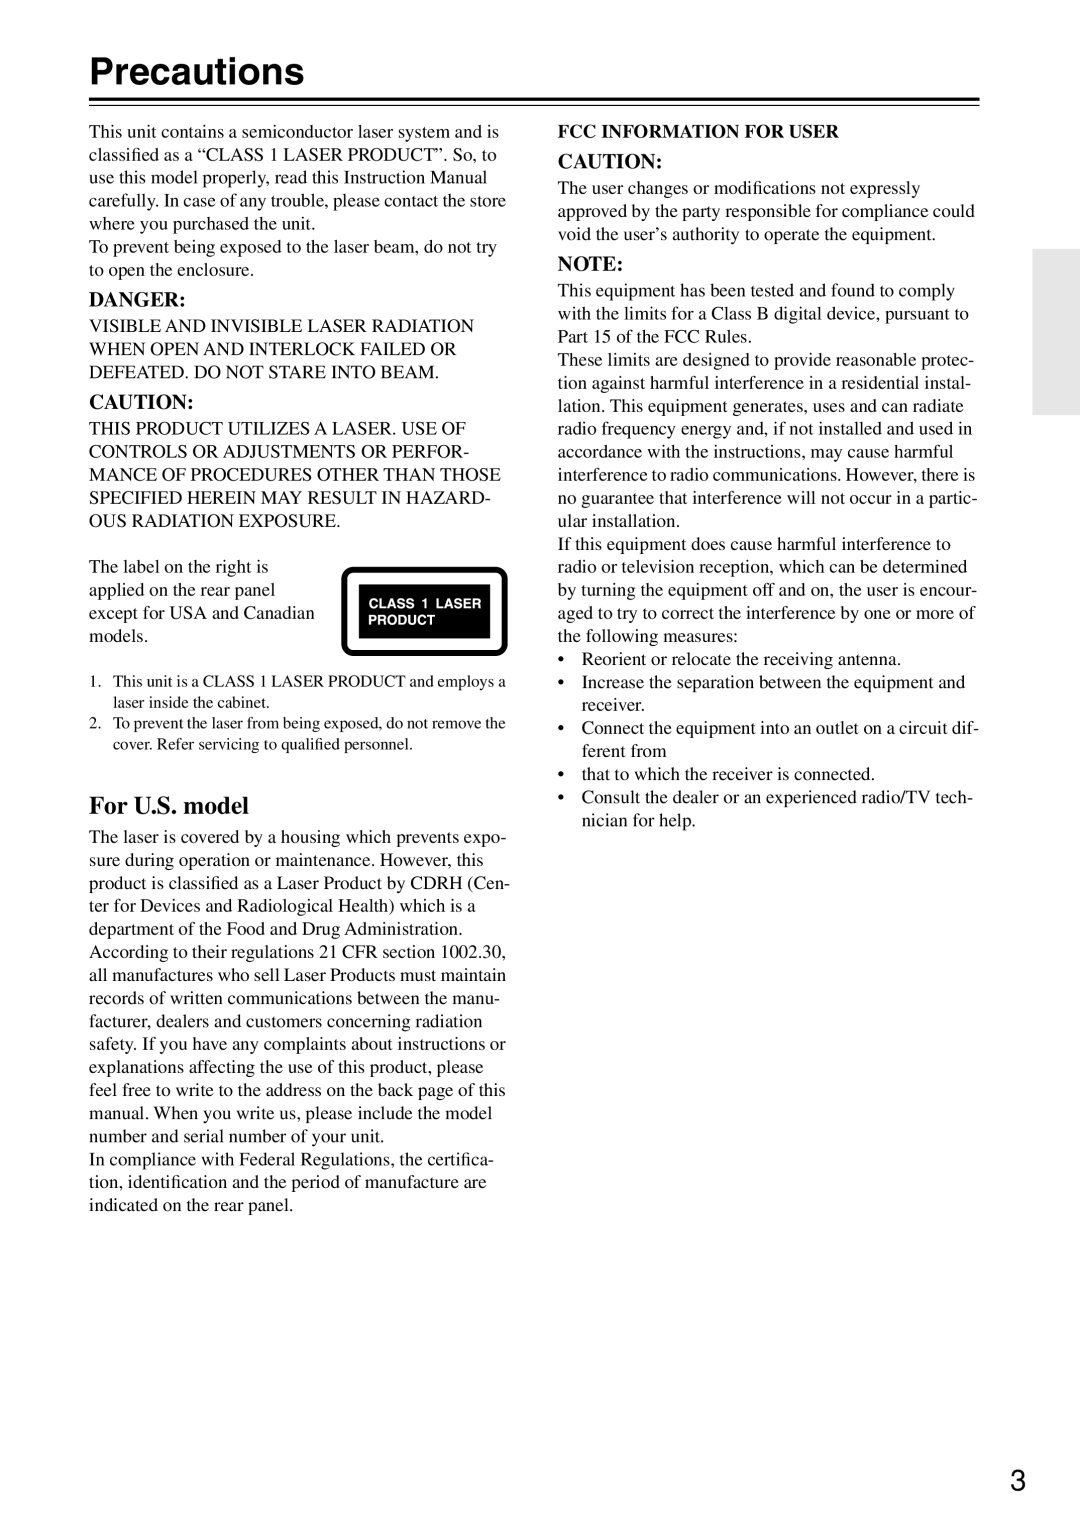 Onkyo DV-SP503E instruction manual Precautions, For U.S. model, Danger, Fcc Information For User 